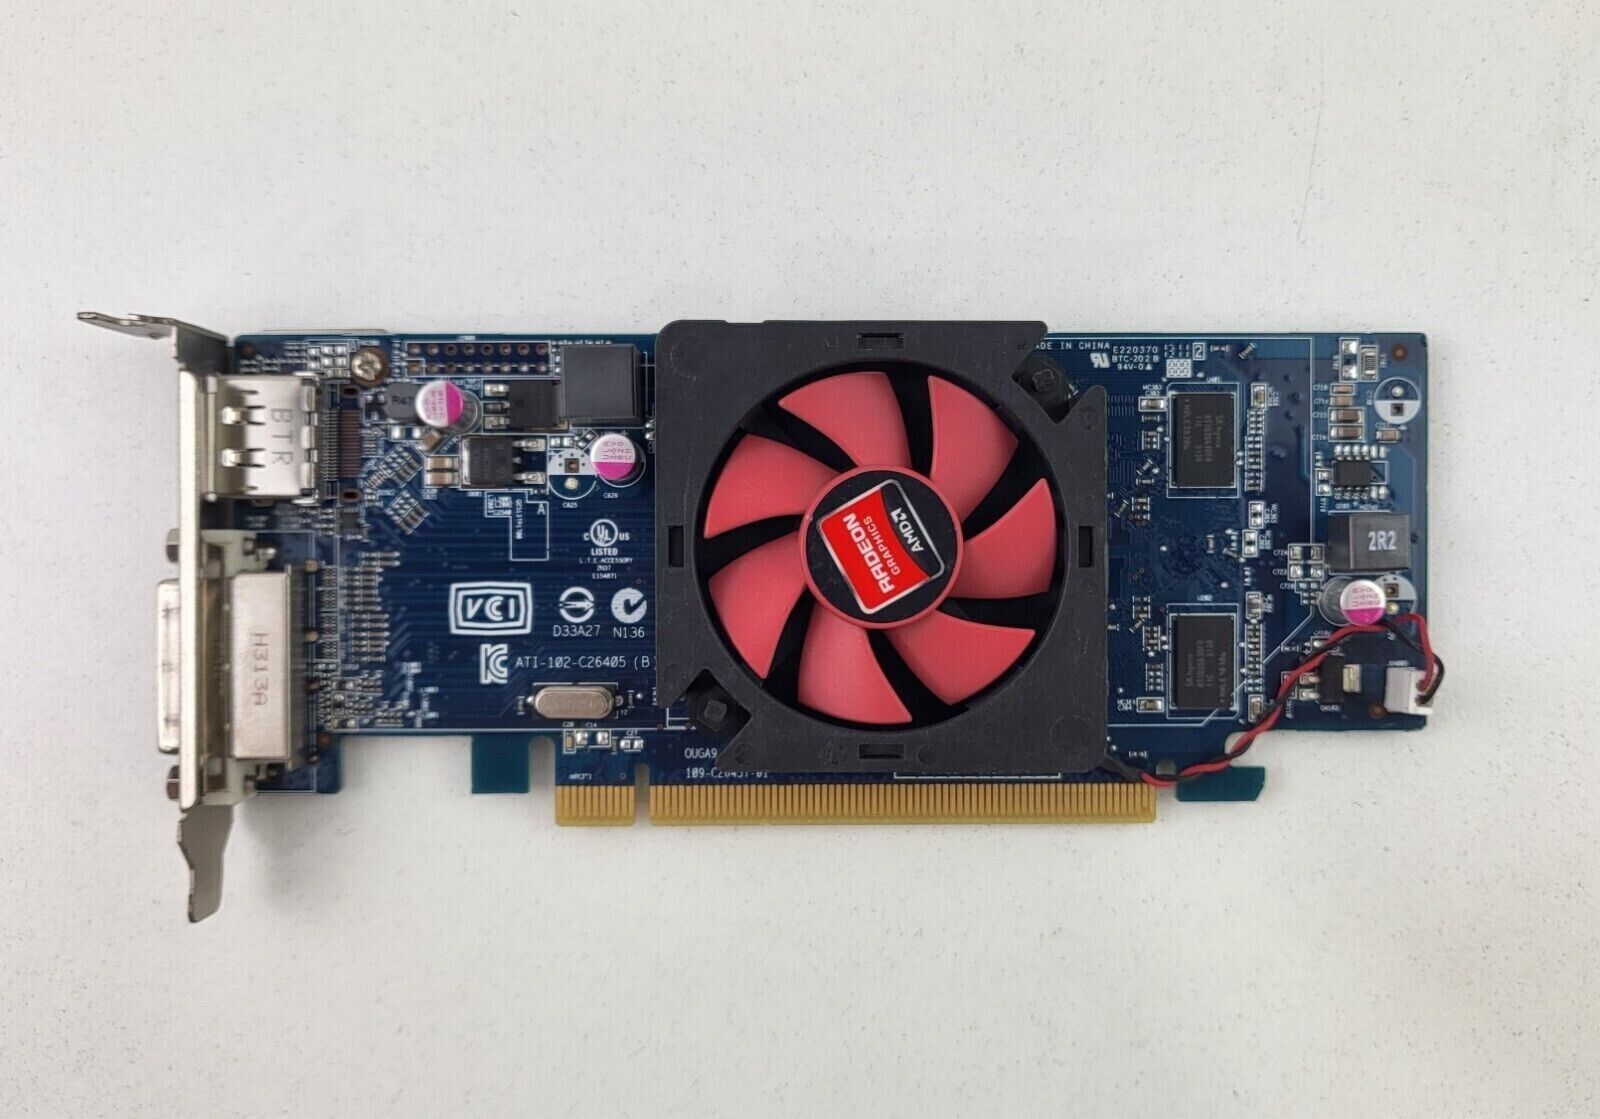 AMD Radeon HD 6450 1GB Video Card C264 DVI+DP SFF LP ATI-102-C26405(B)